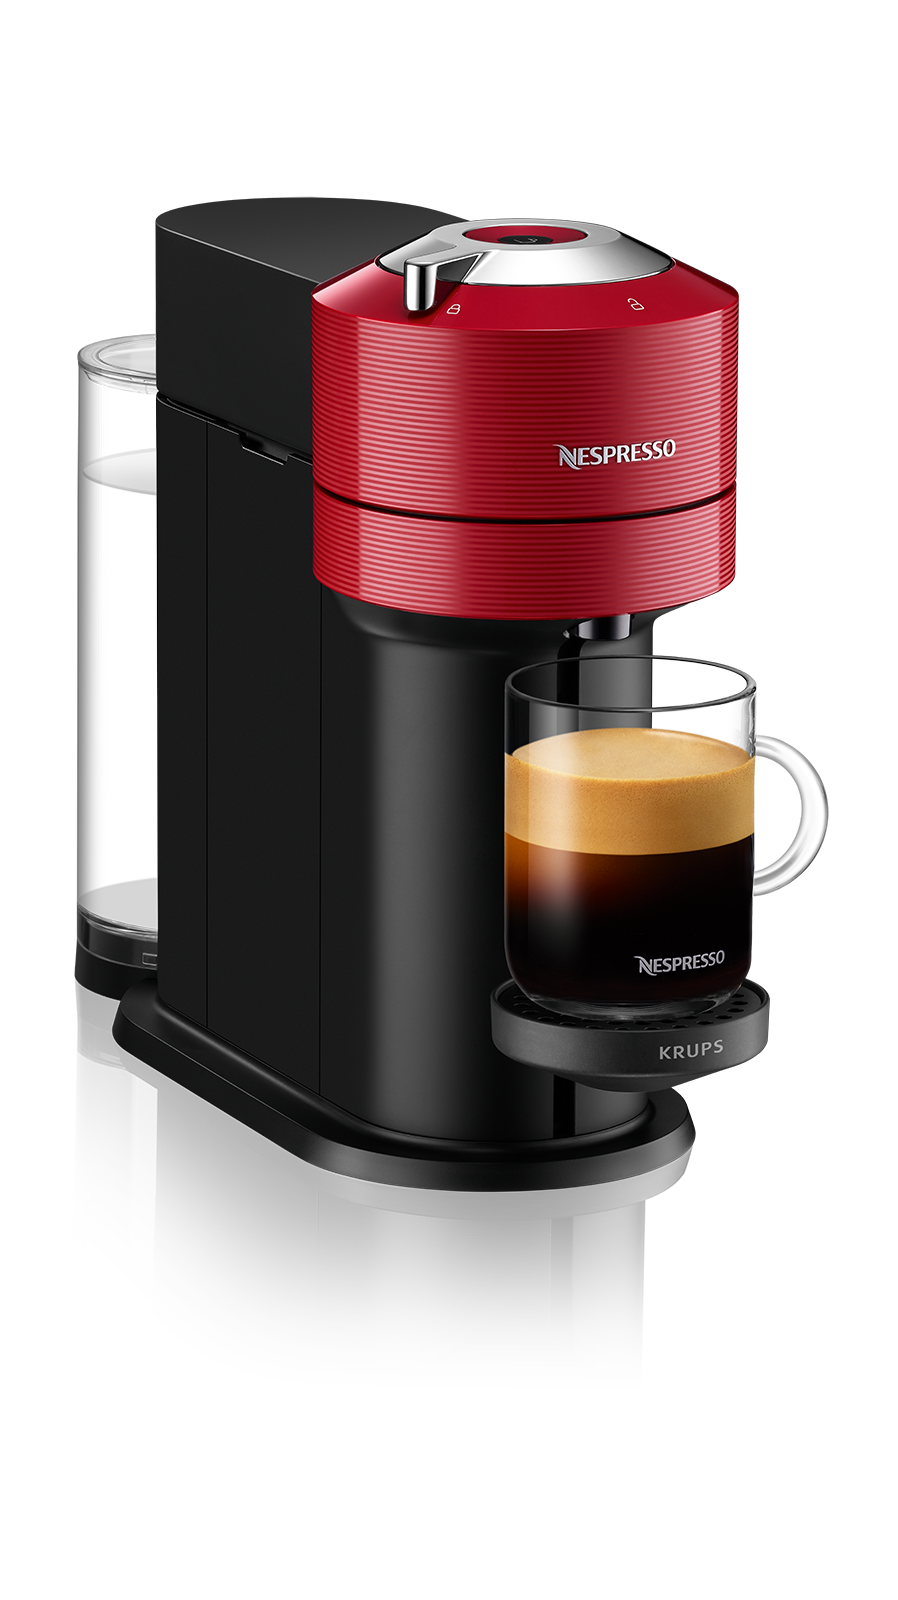 Nespresso Vertuo Next XN9105CH